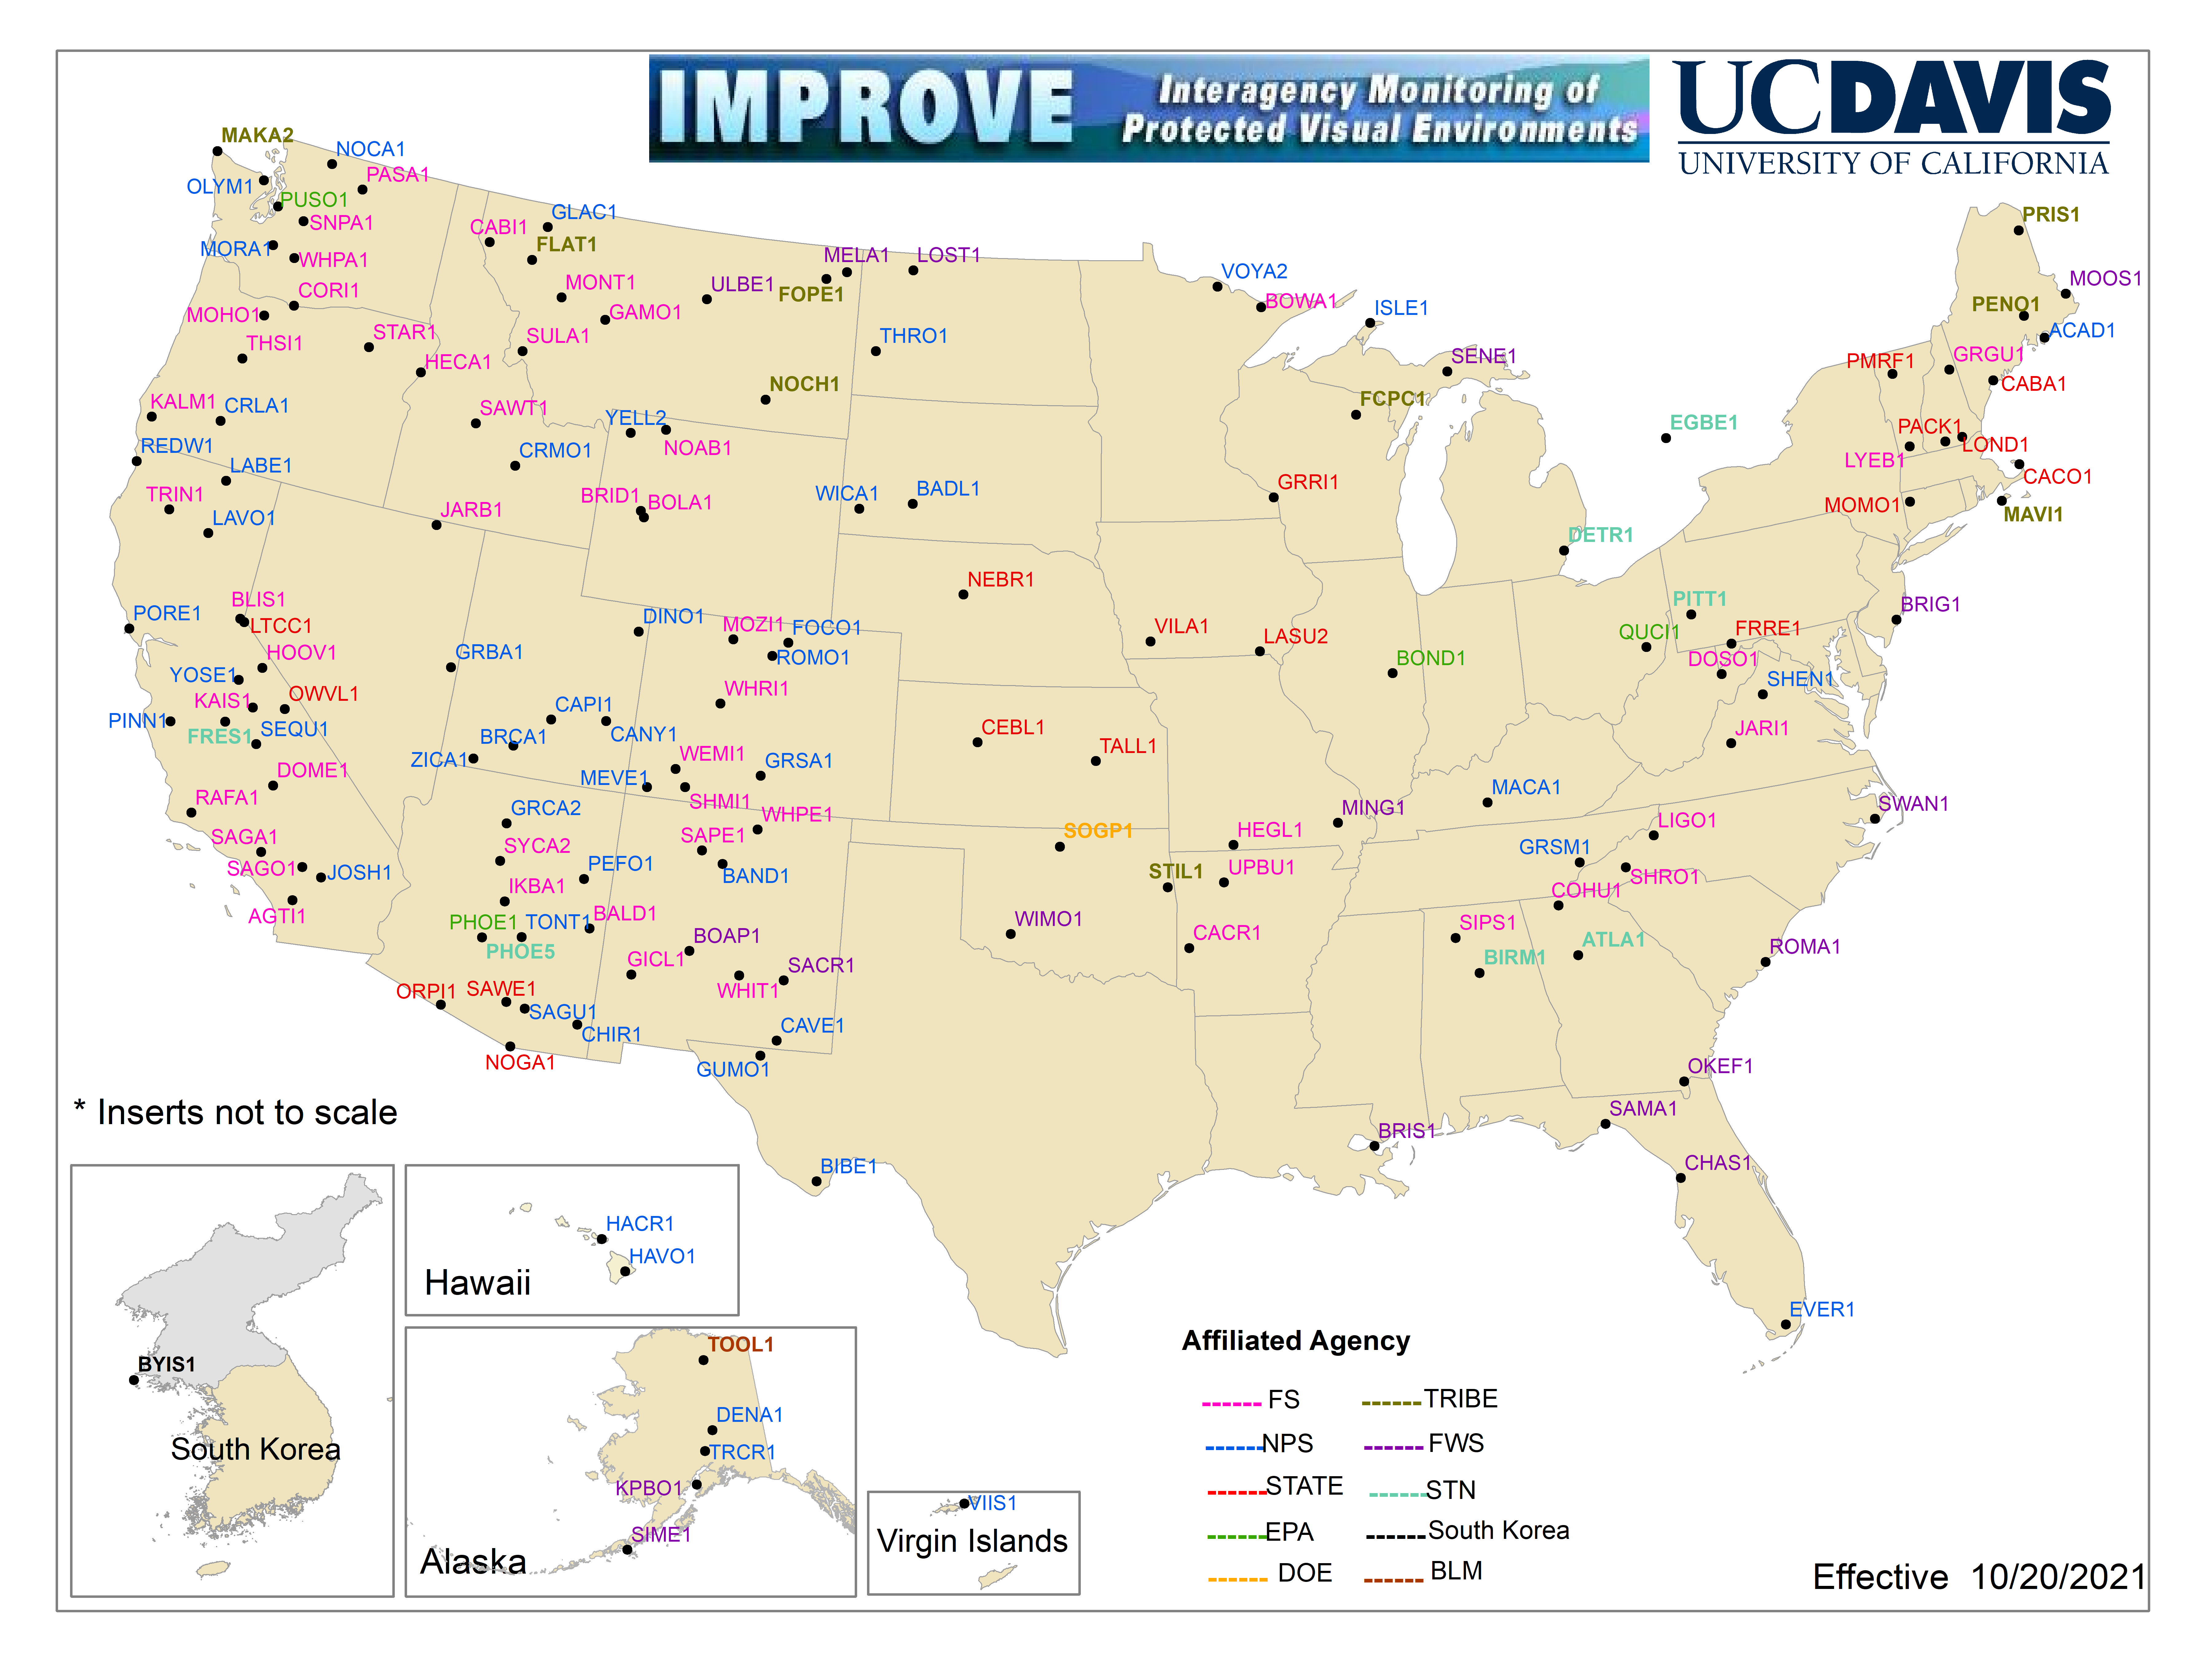 Image: map of IMPROVE site locations across North America, plus South Korea.